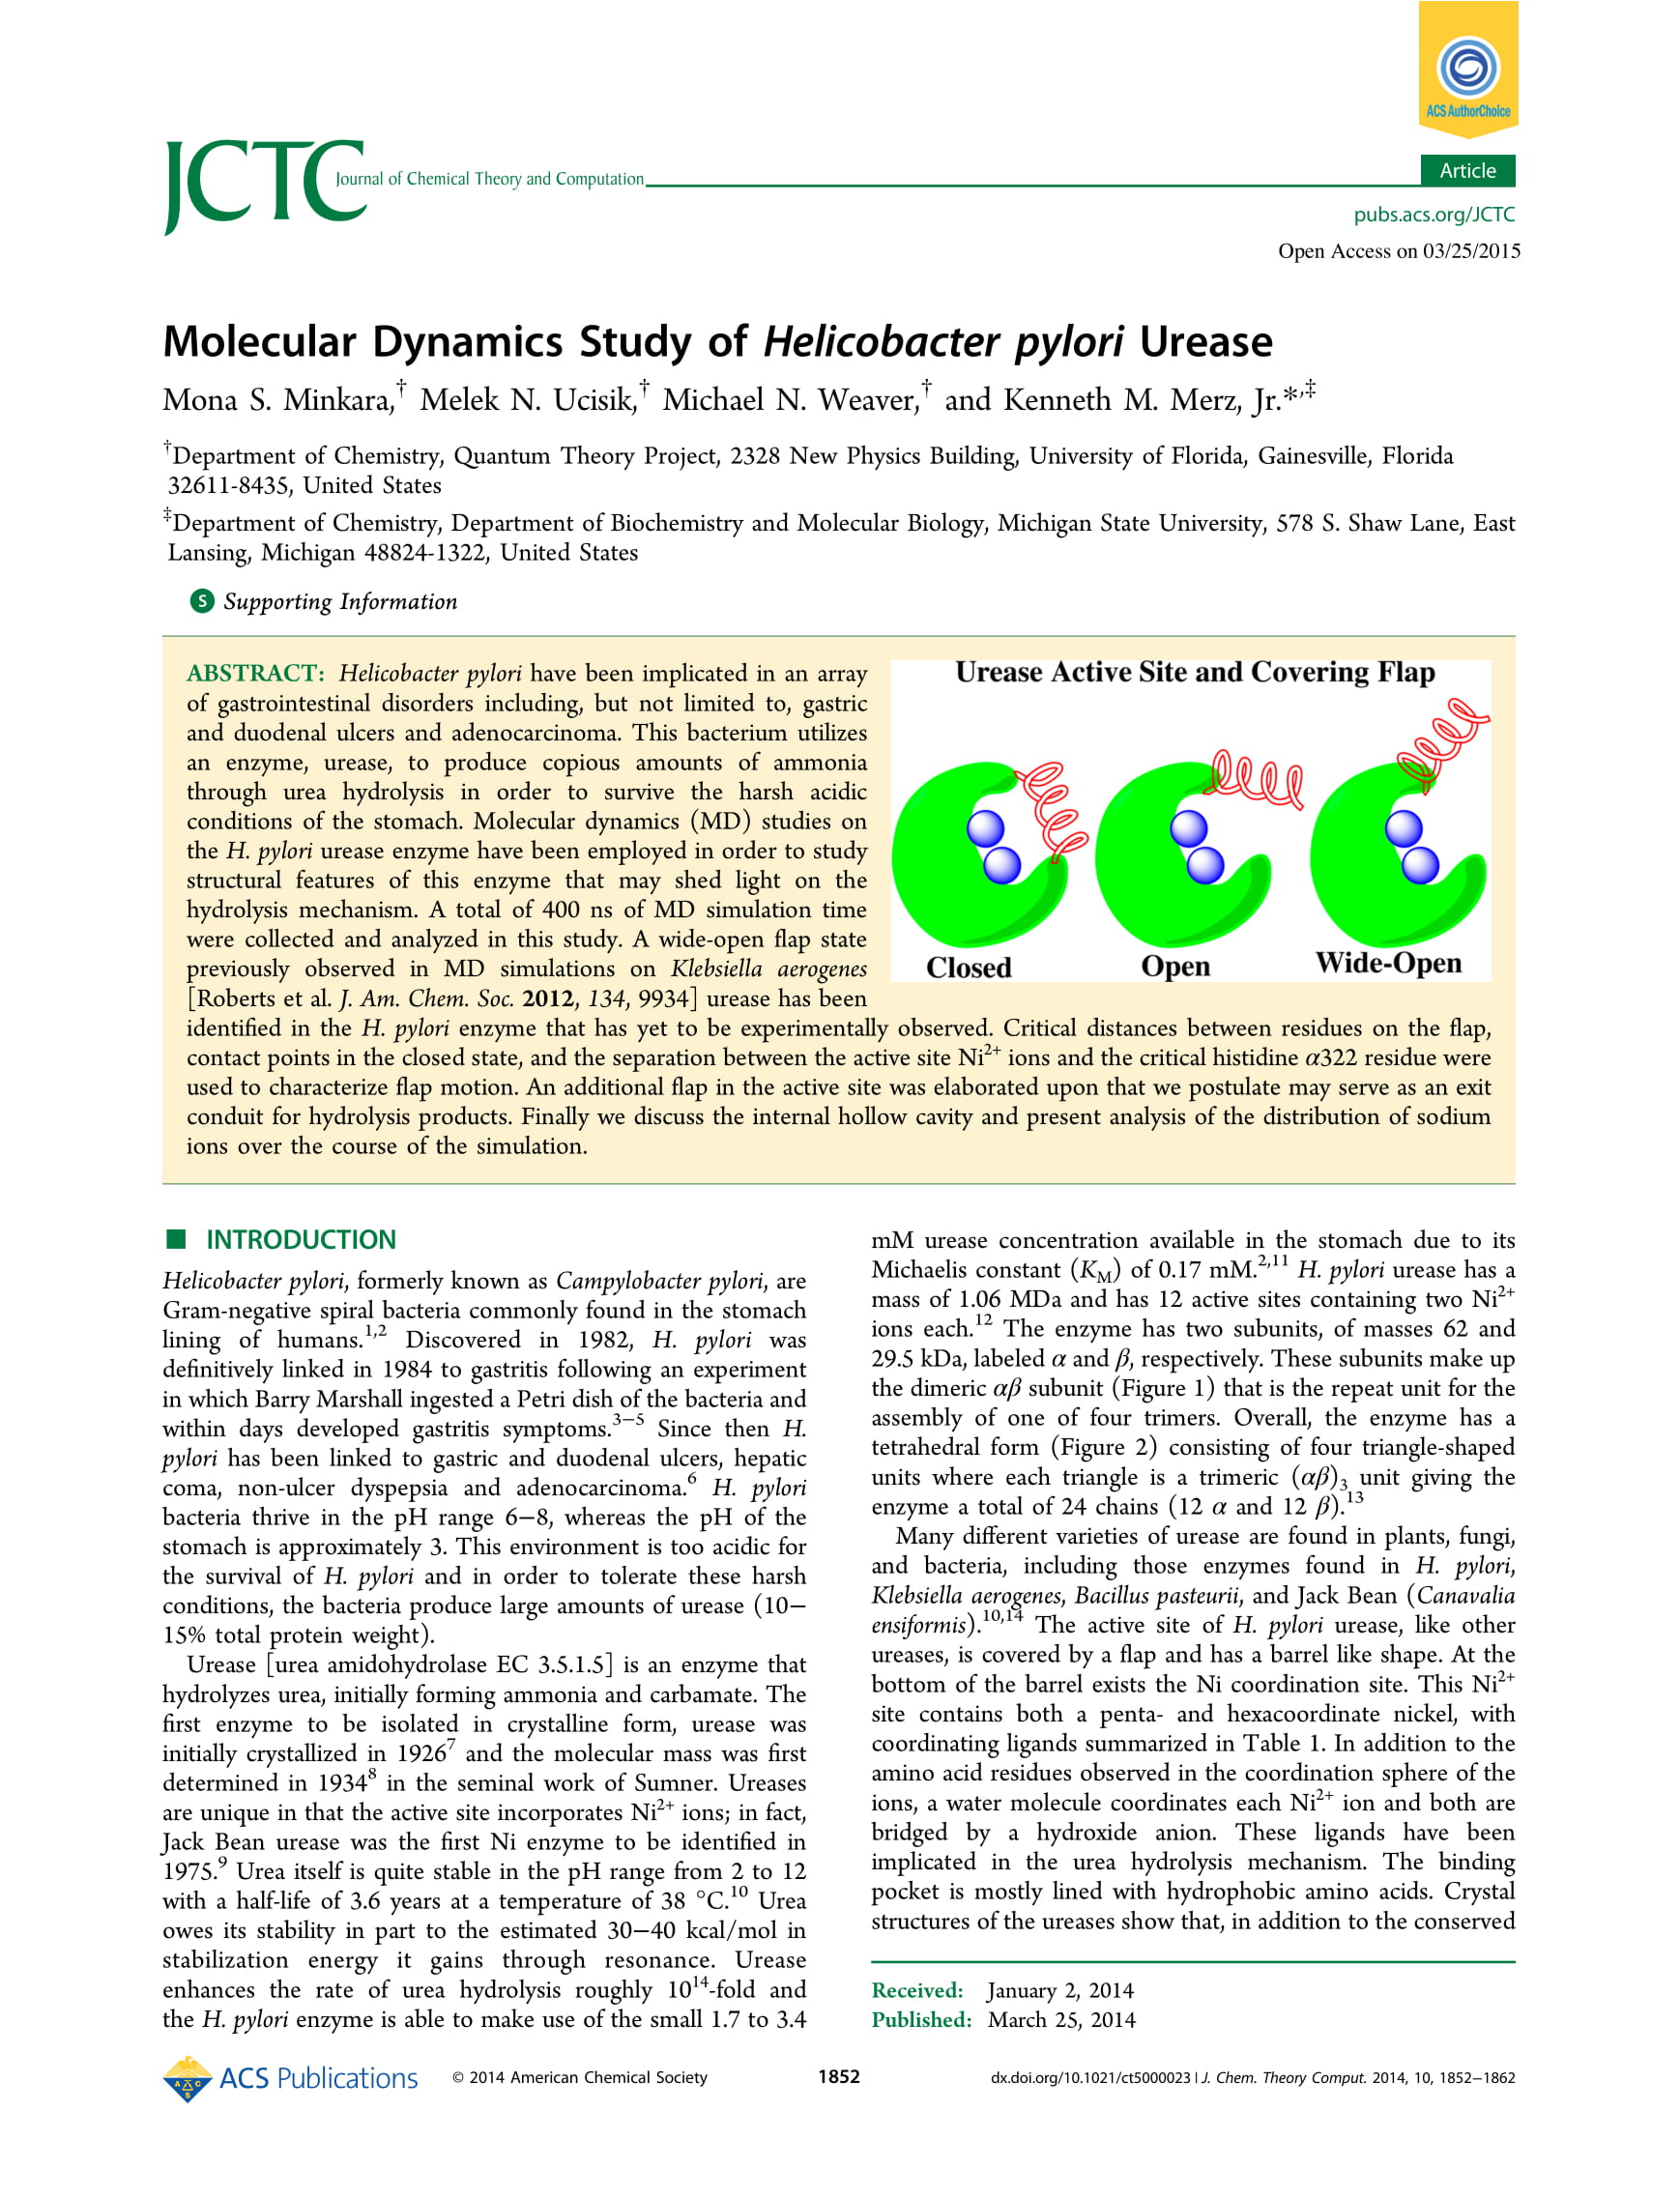 Molecular Dynamics Study of Helicobacter Pylori Urease